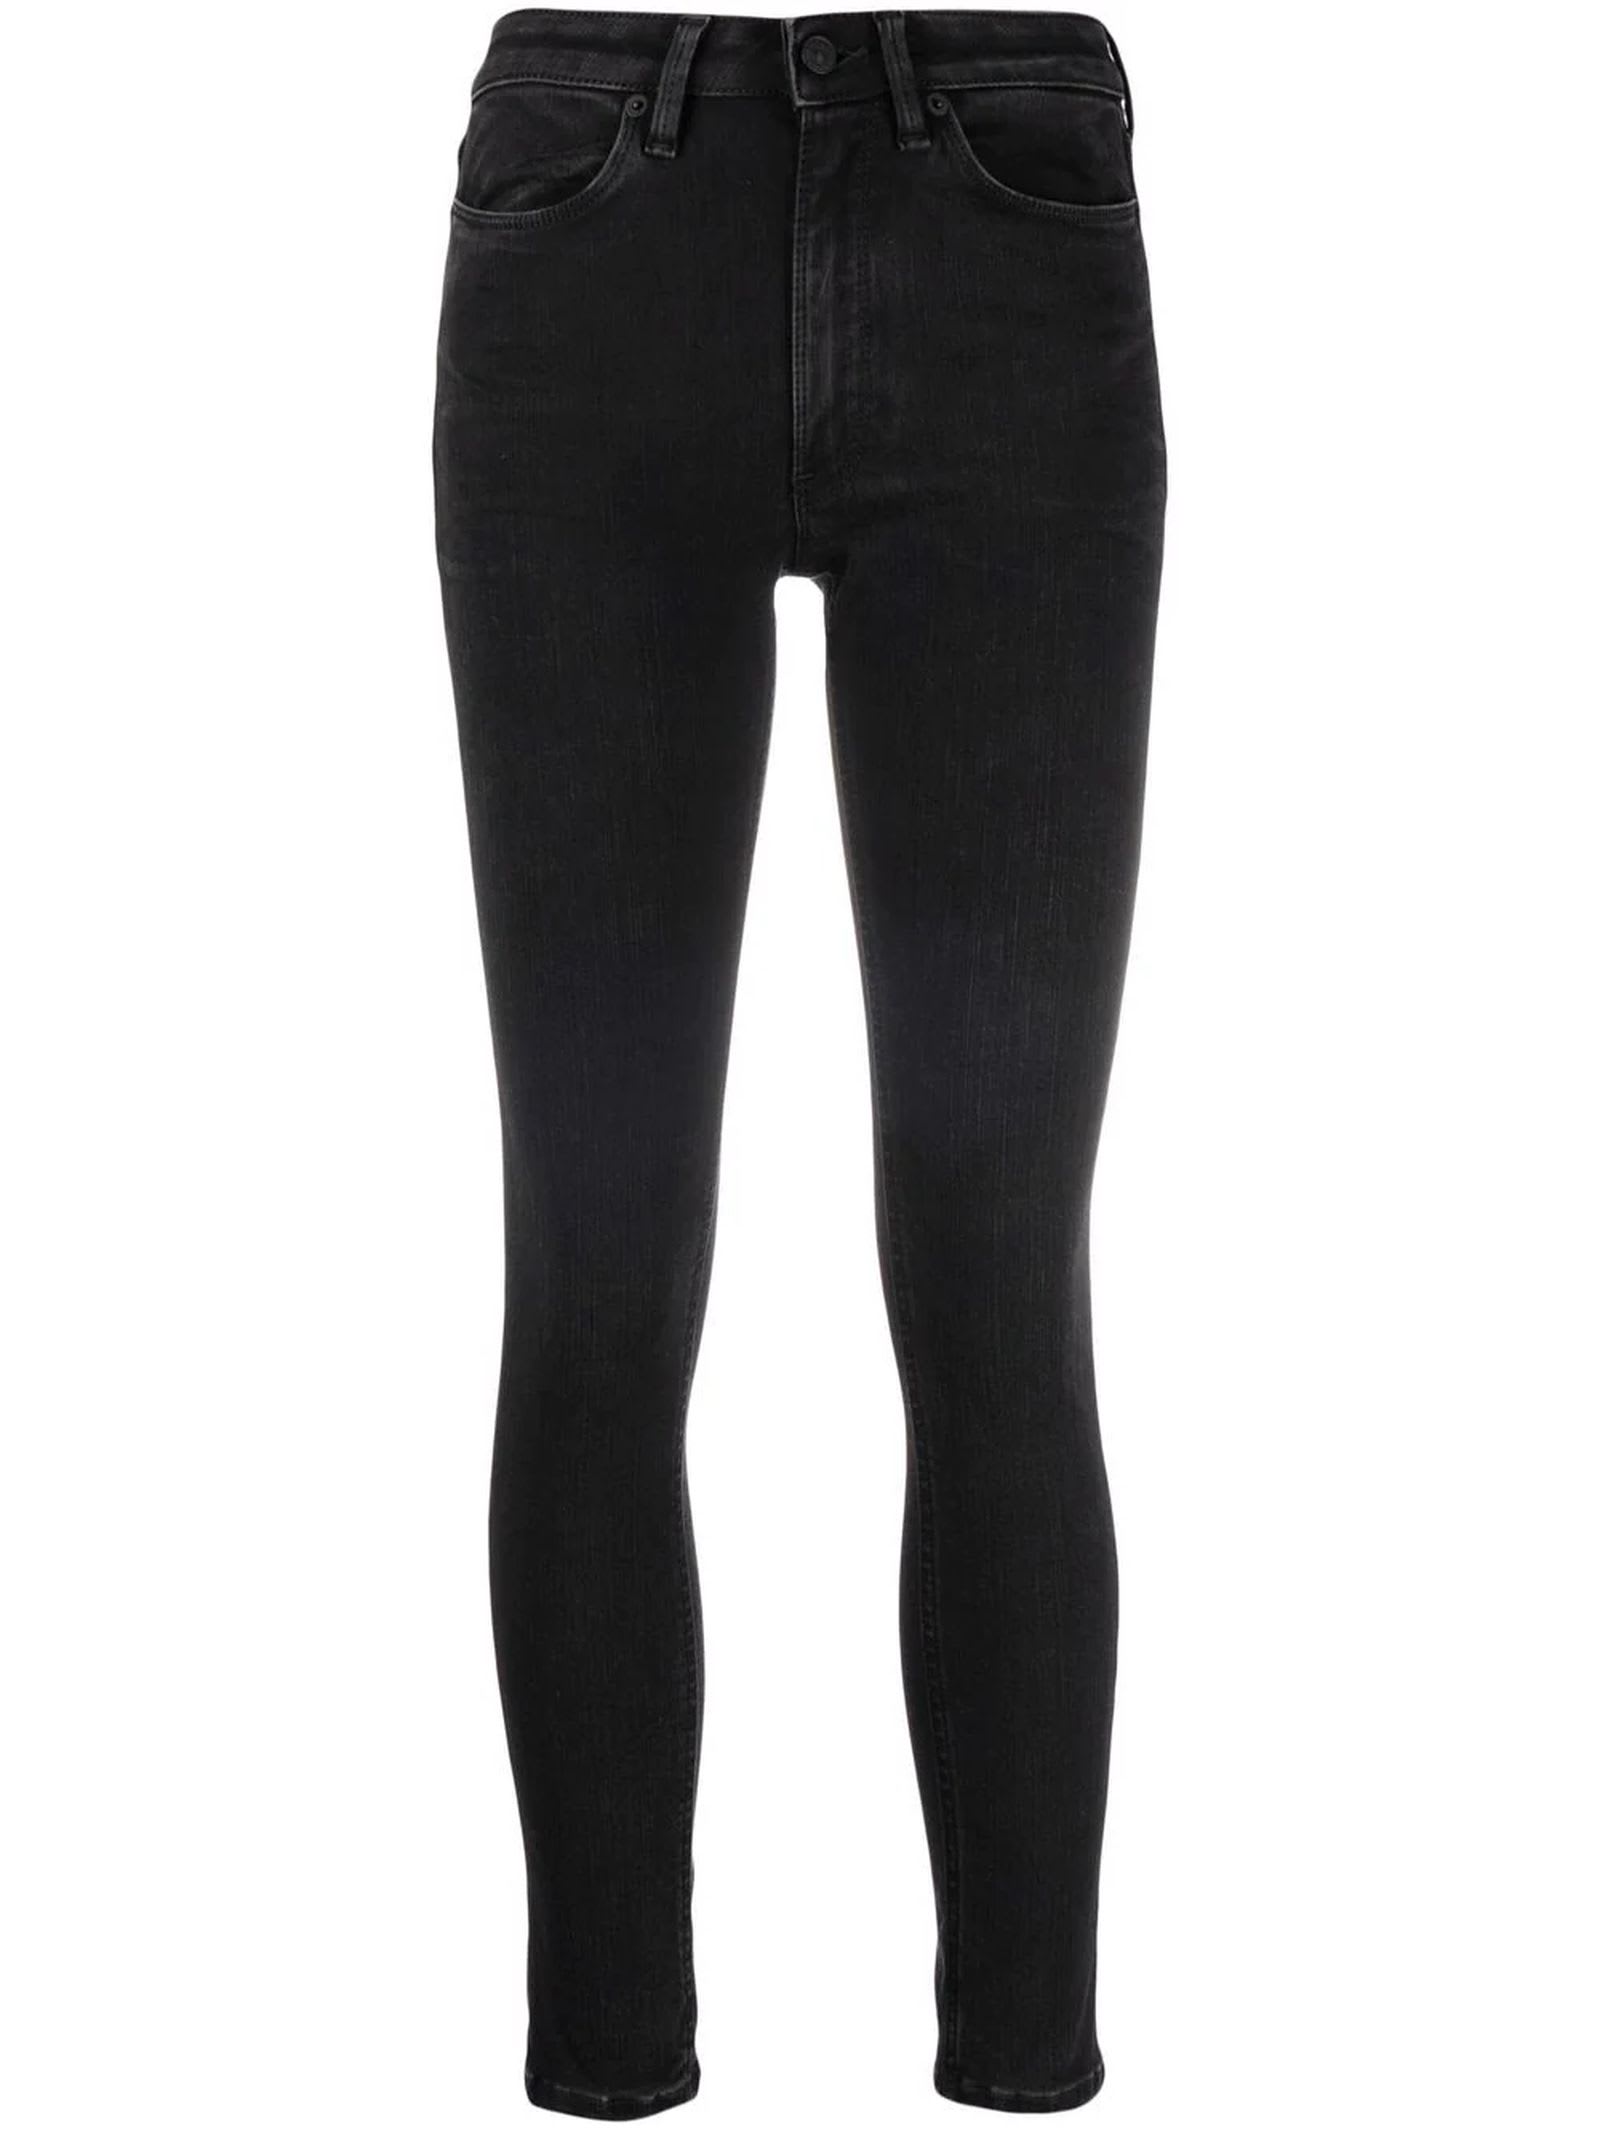 Dondup Black Cotton Blend Skinny Jeans